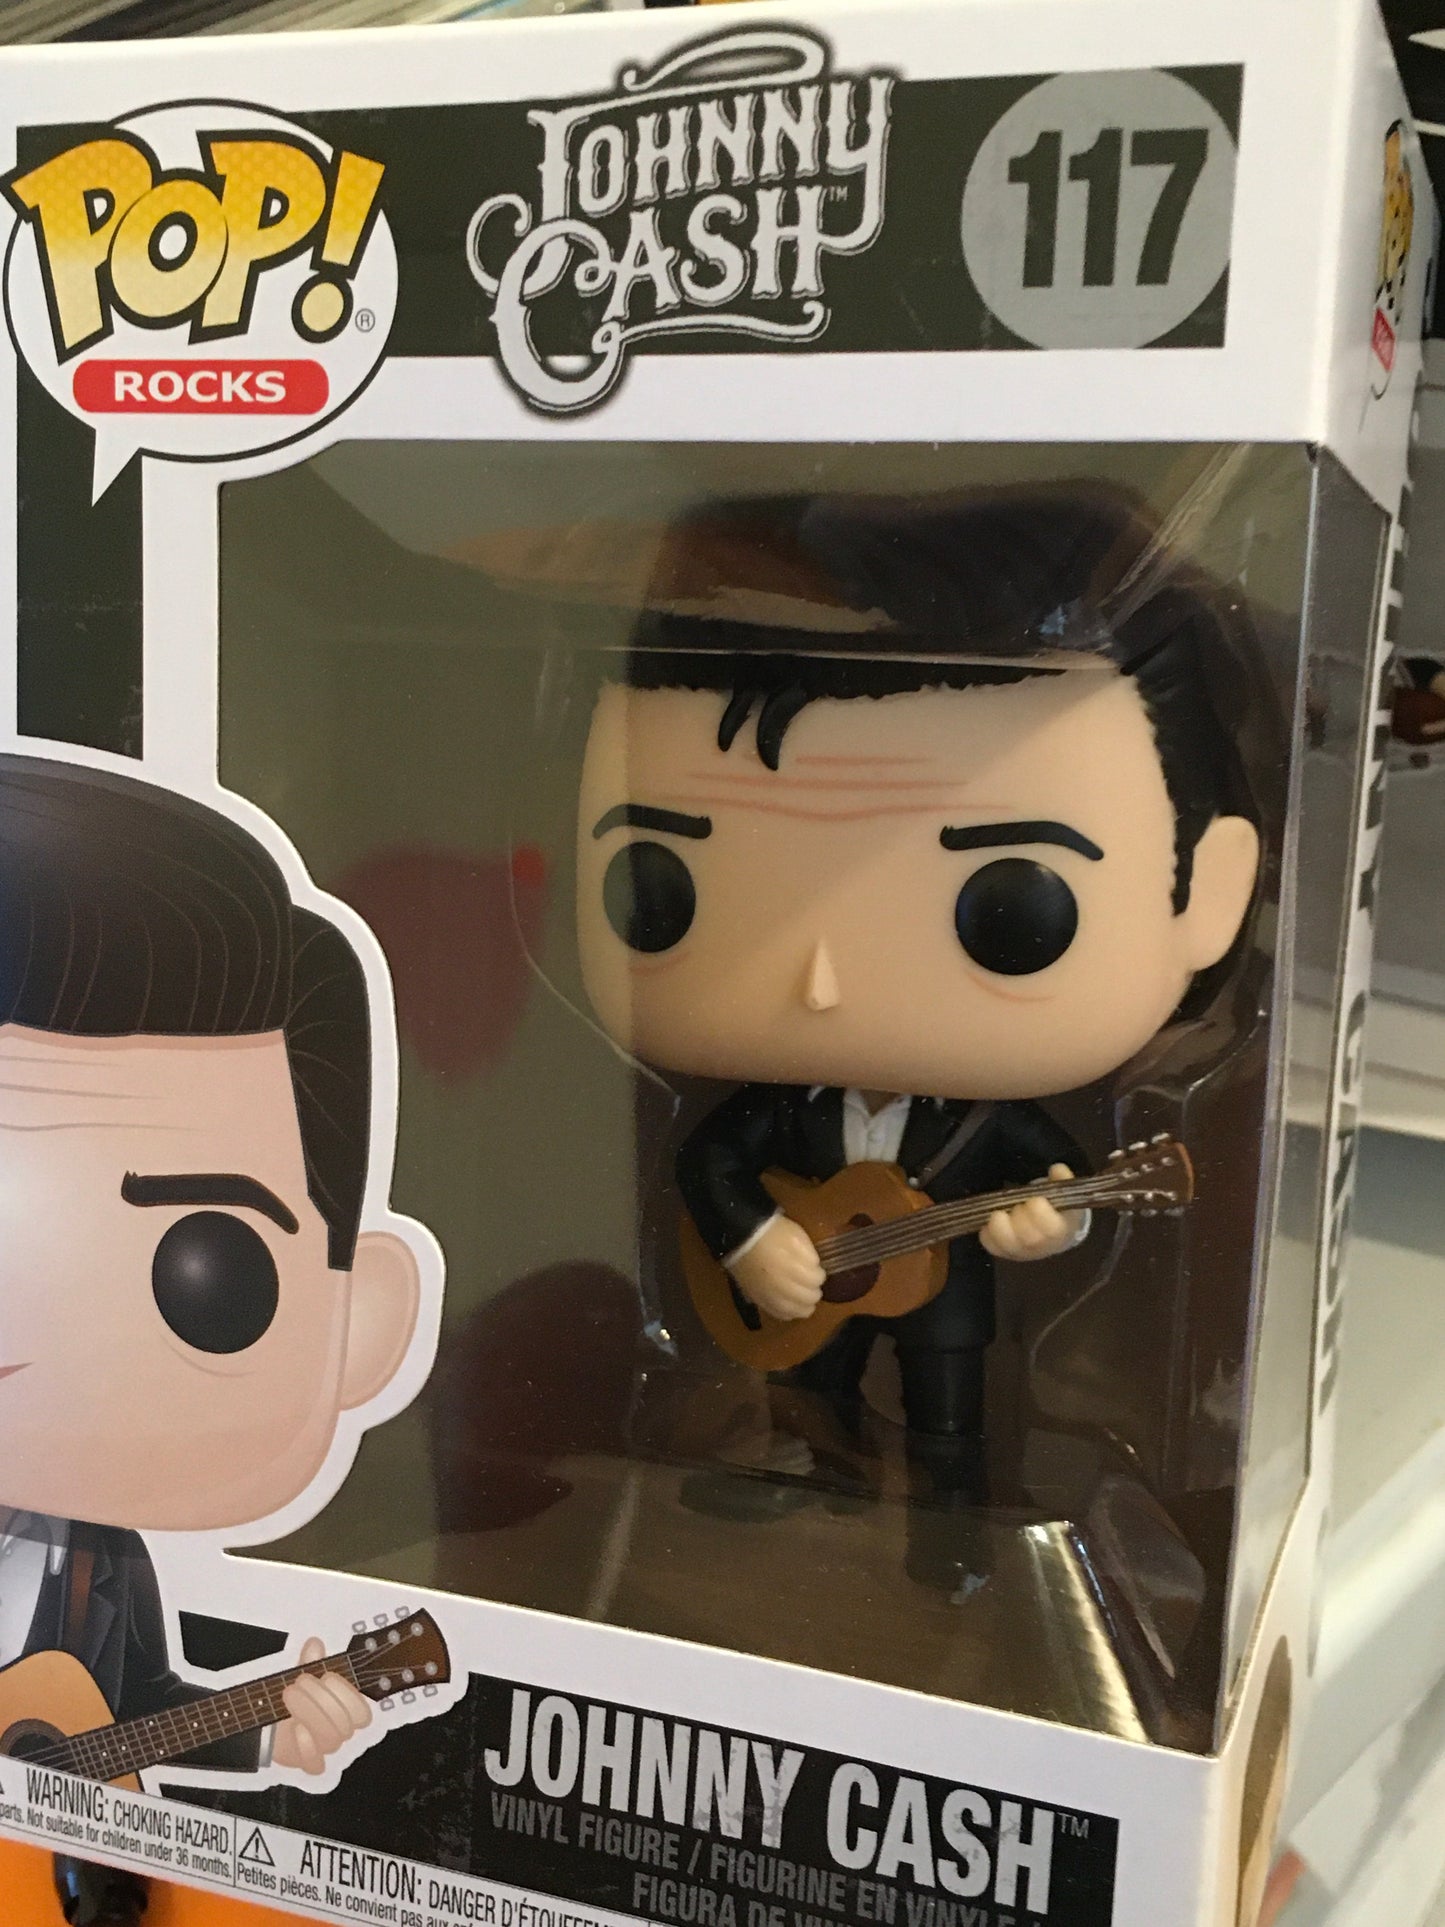 Johnny Cash 117 rocks Funko Pop! Vinyl figure